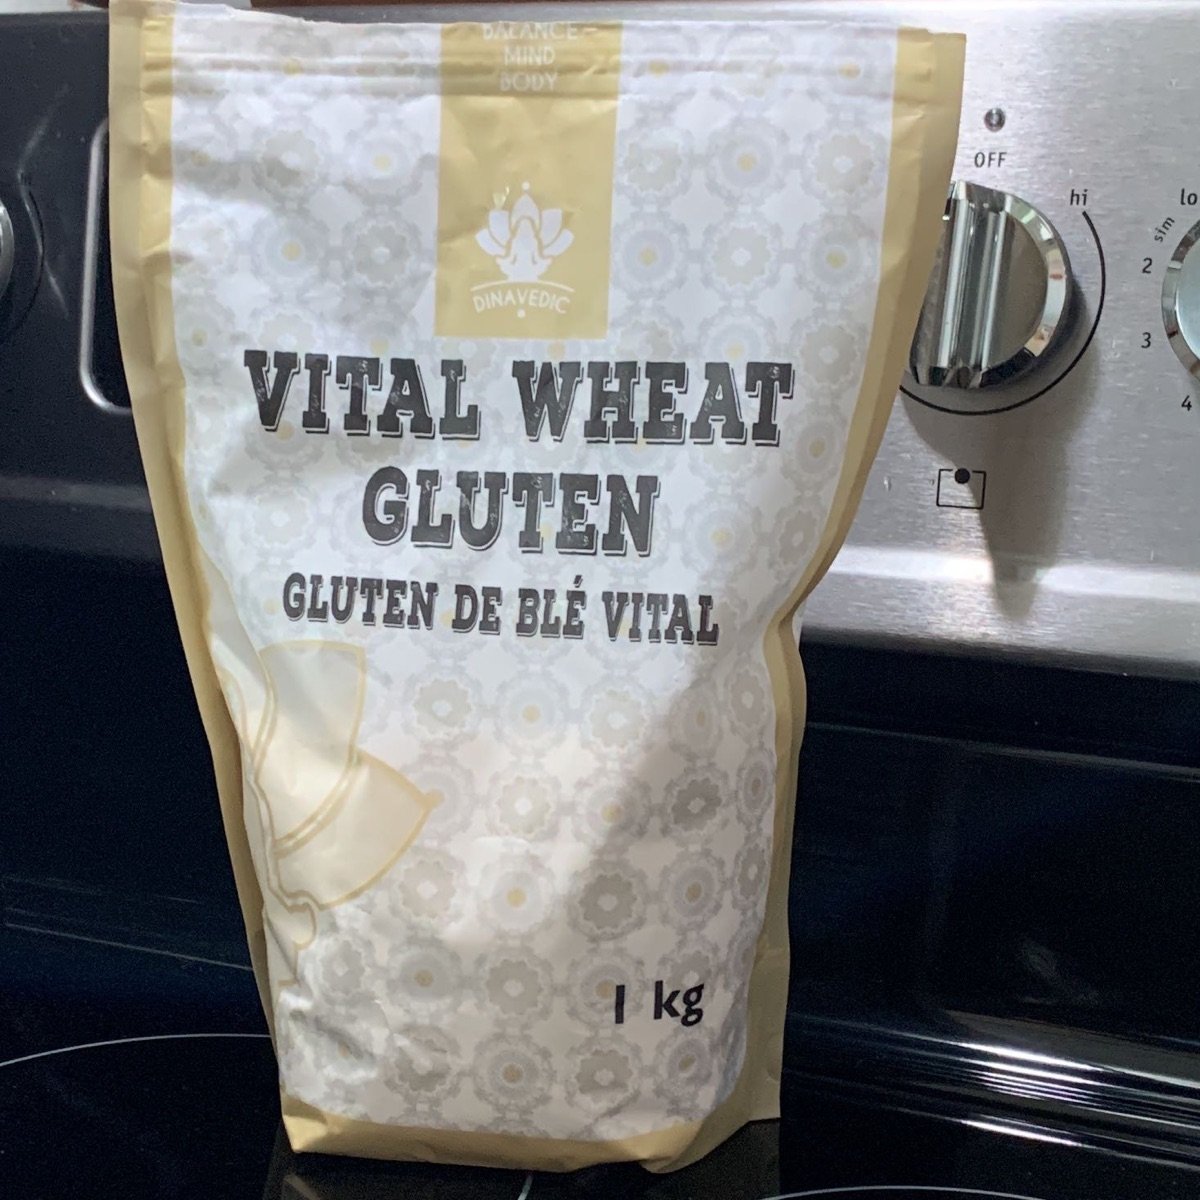 Dinavedic Vital Wheat Gluten Reviews | abillion